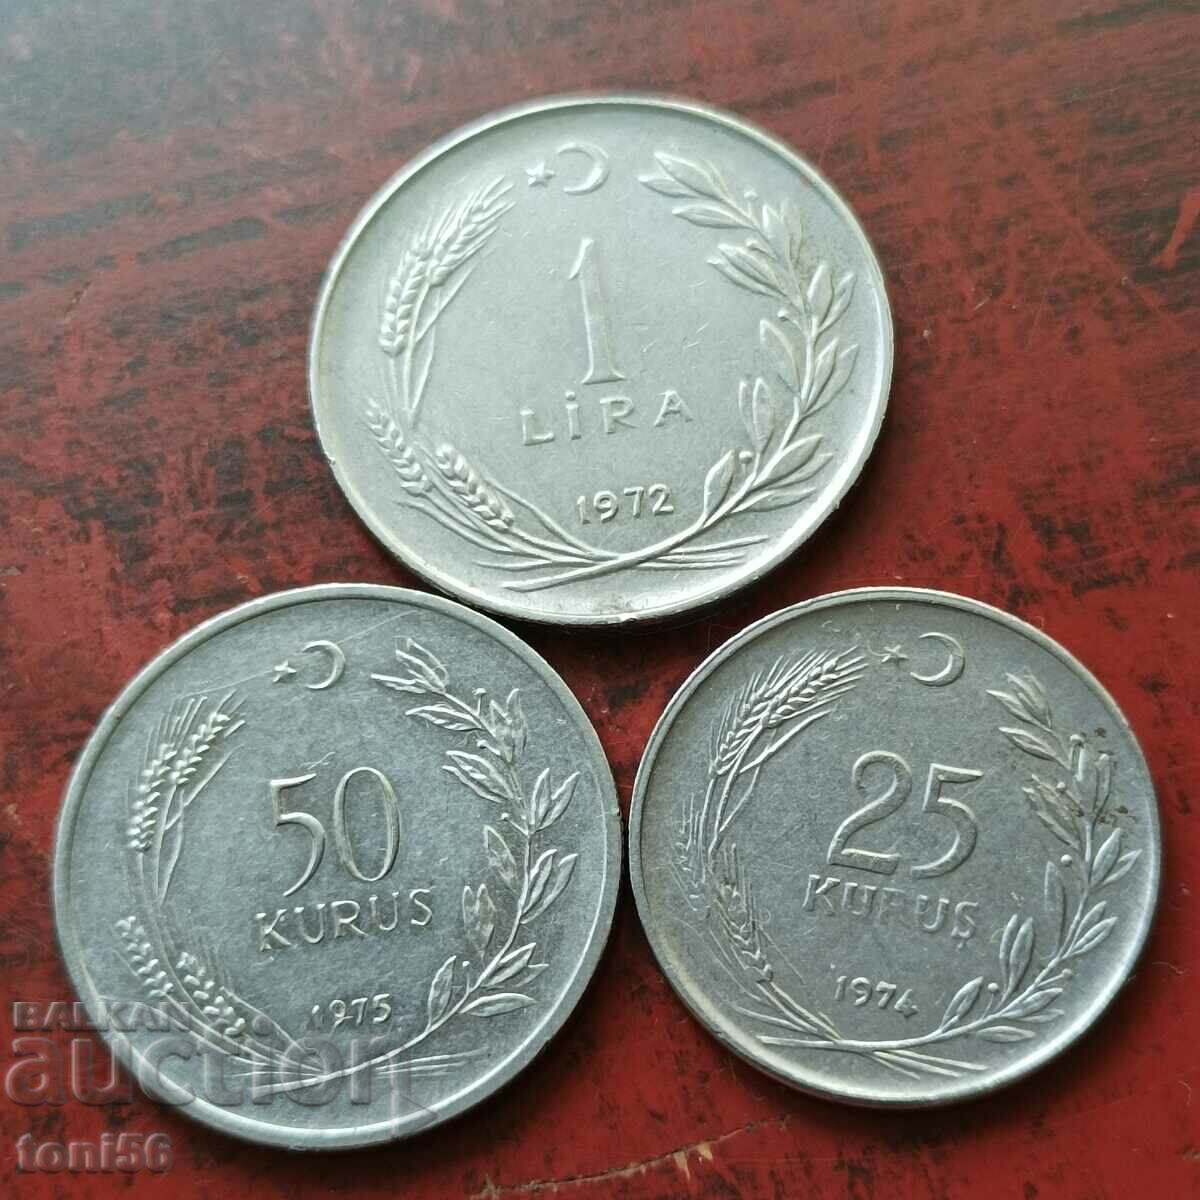 Turkey set 25, 50 kurusha and 1 lira 1972/75